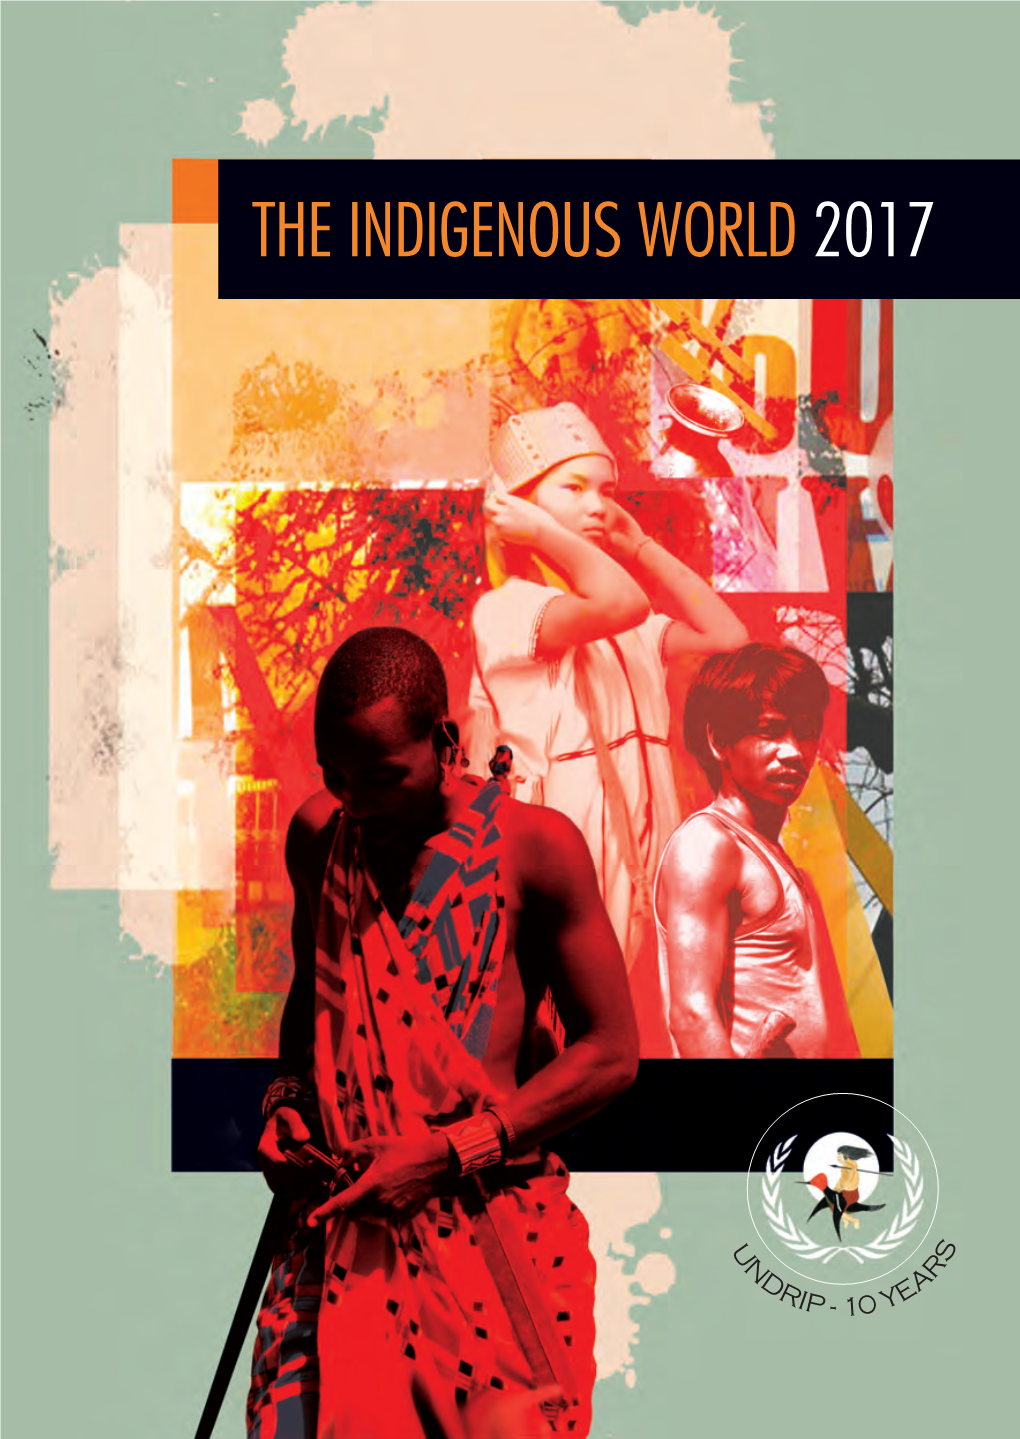 The Indigenous World 2017.Pdf 3.66 MB